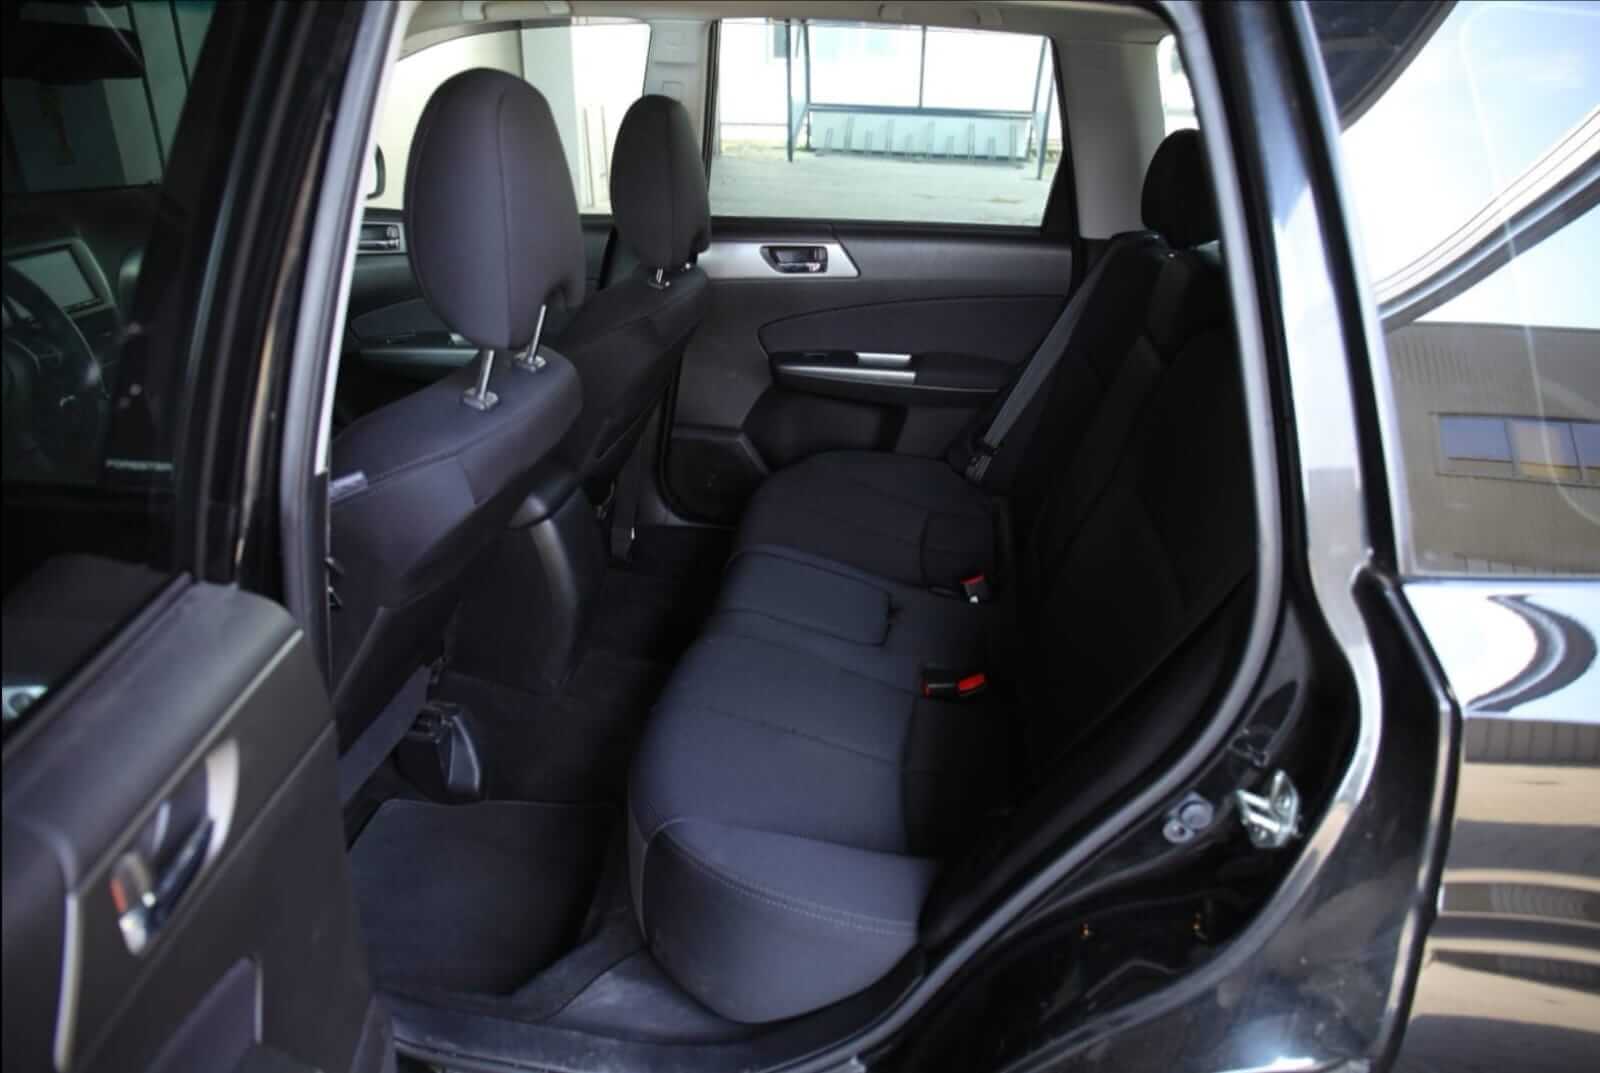 Subaru Forester front rear interior – by Next Level Automotive – Go to nextlevelautomotive.eu